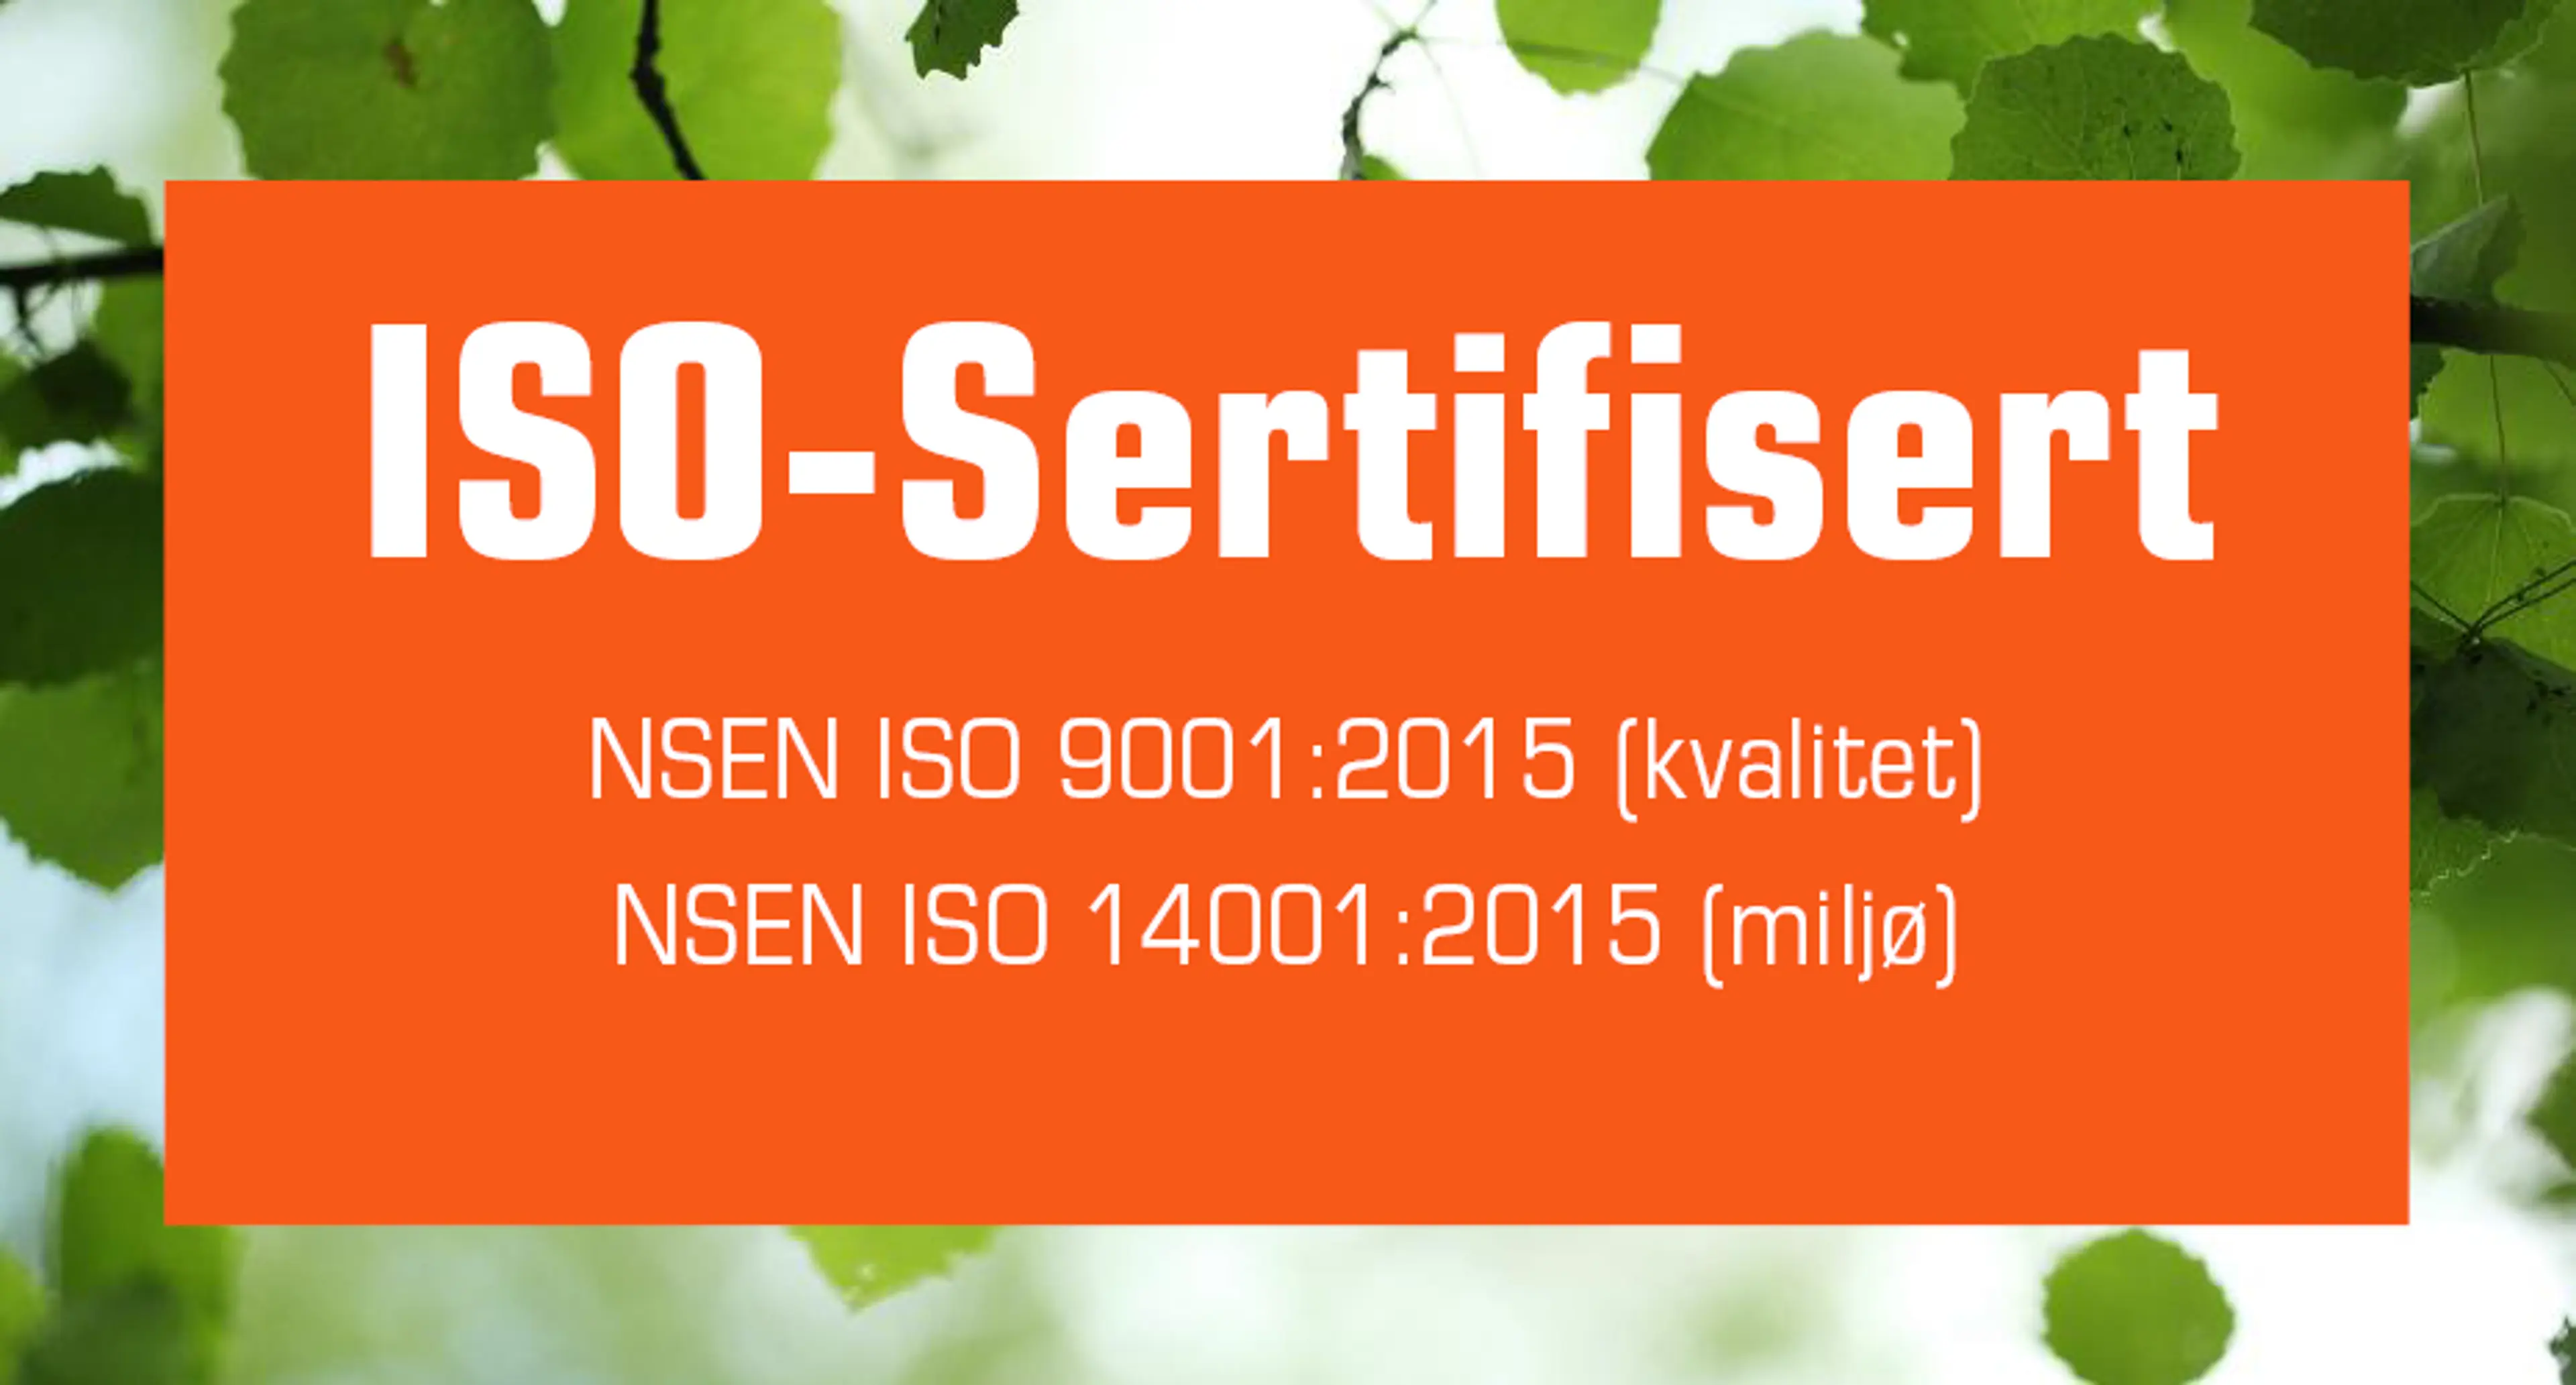 ISO-Sertifisert NSEN ISO 9001:2015 (kvalitet) NSEN ISO 14001:2015 (miljø)